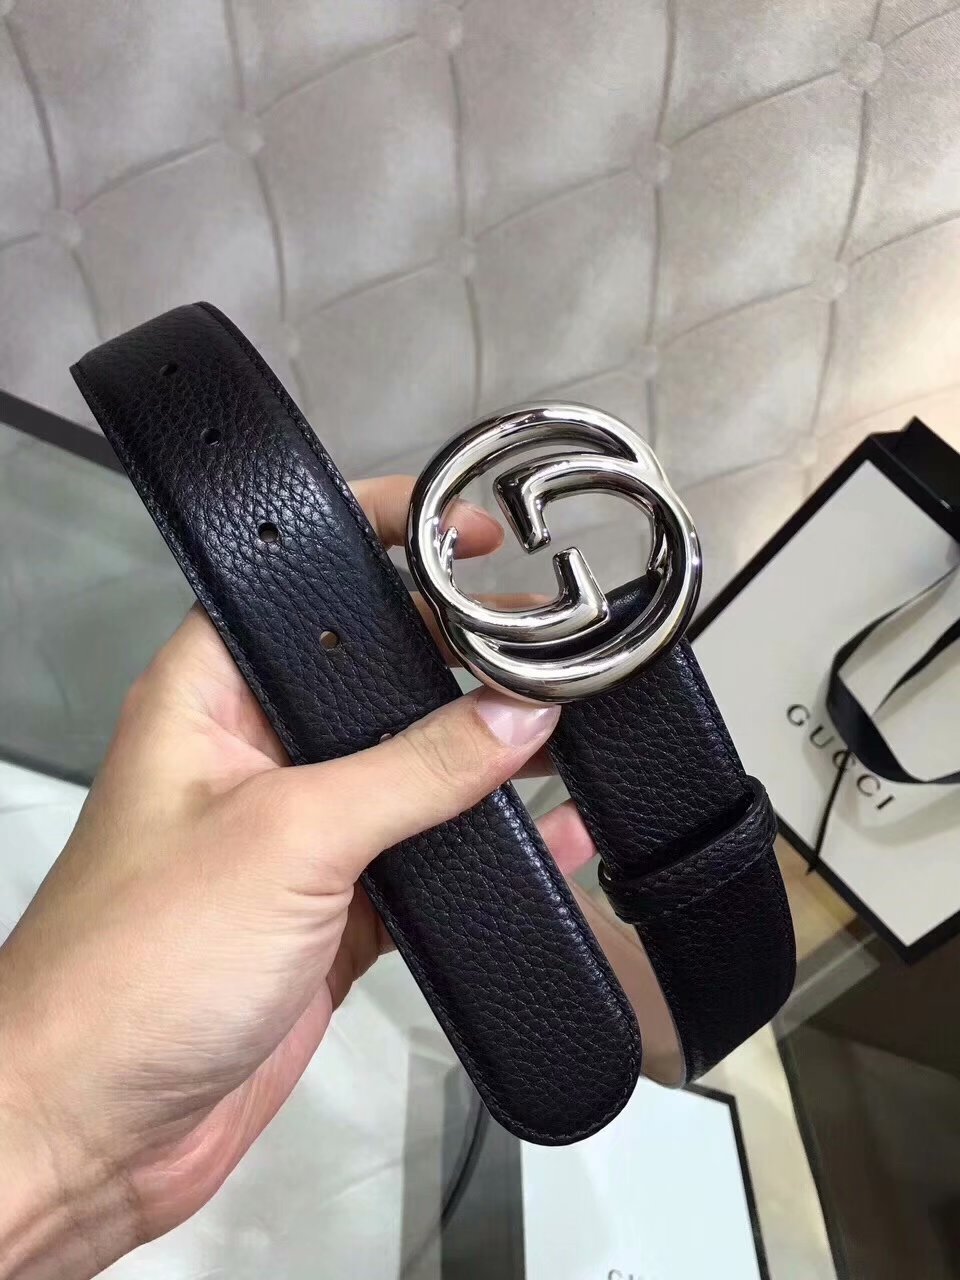 Replica Cheap Gucci Men Leather Black Belt Width 3.8cm With Silver Buckle 059